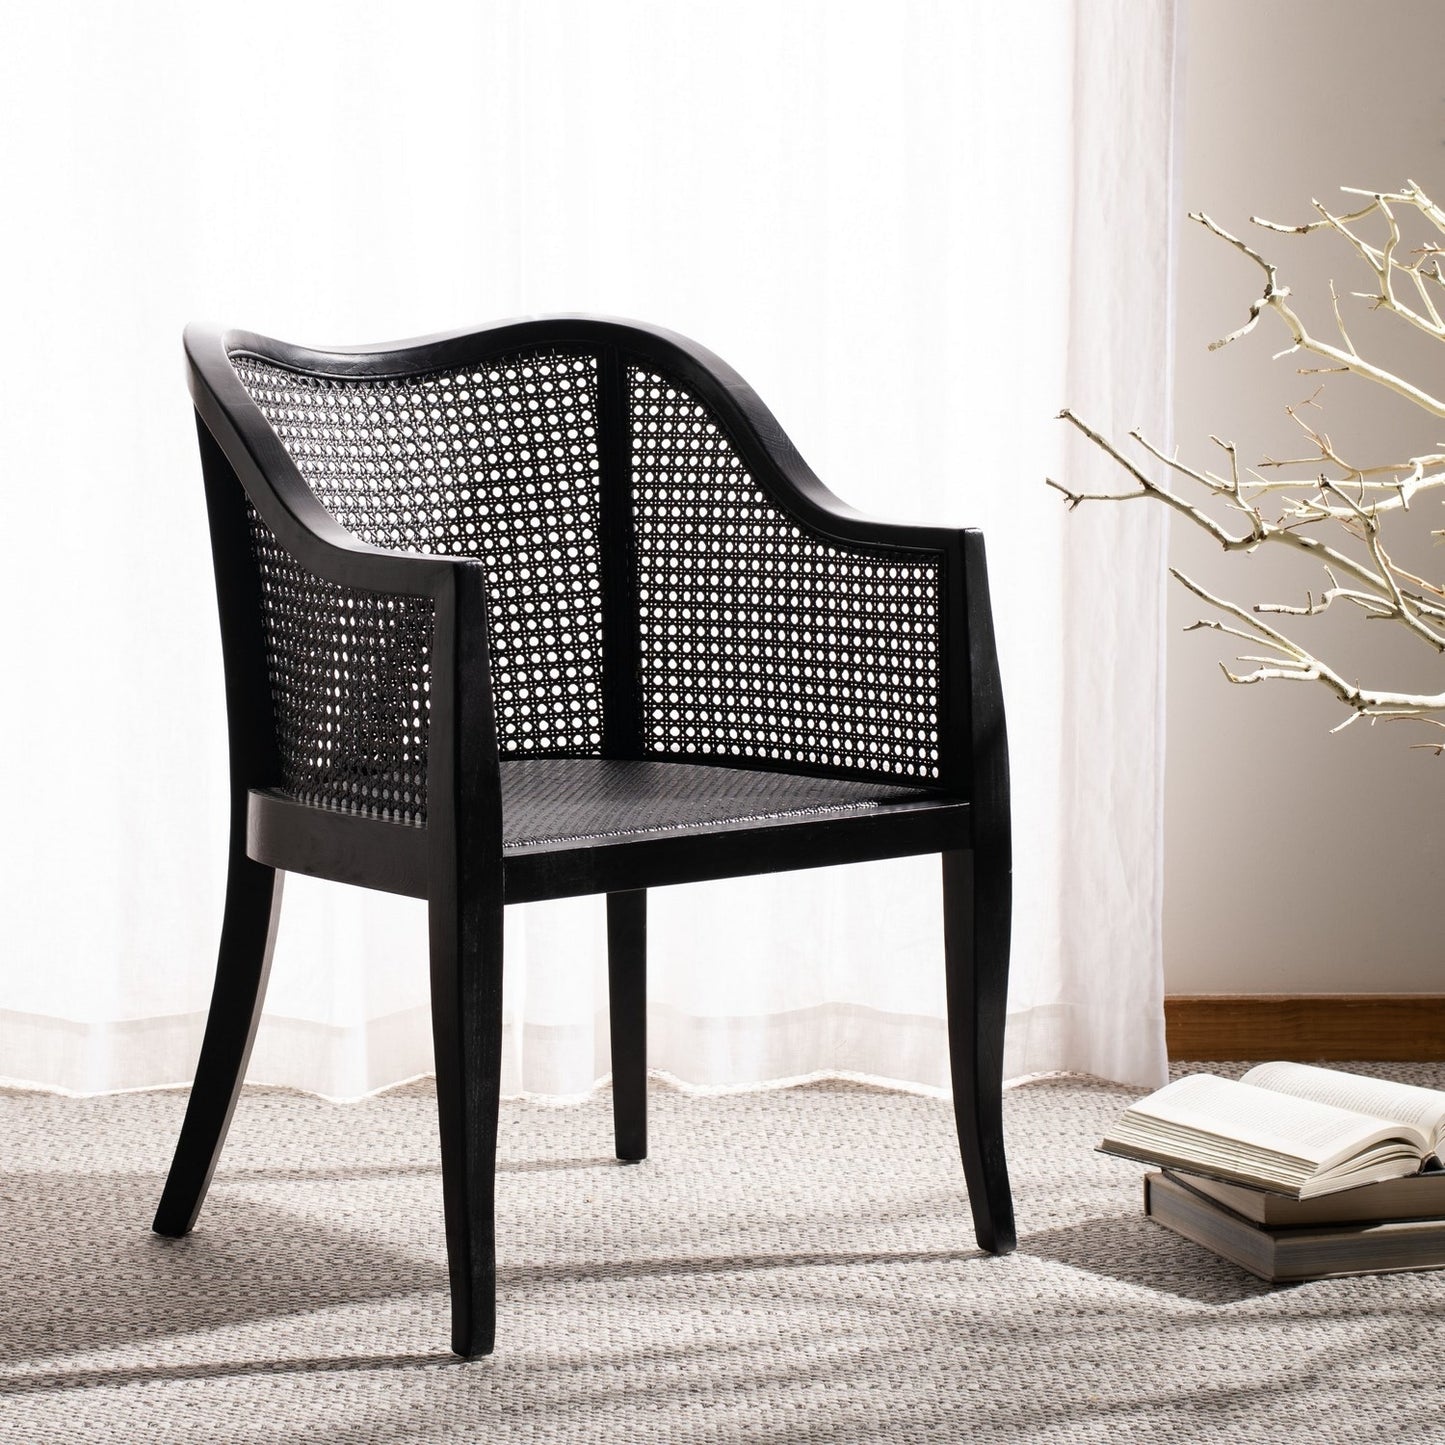 SAFAVIEH Maika Cane Dining Chair - 23.6" x 23.8" x 32.7"